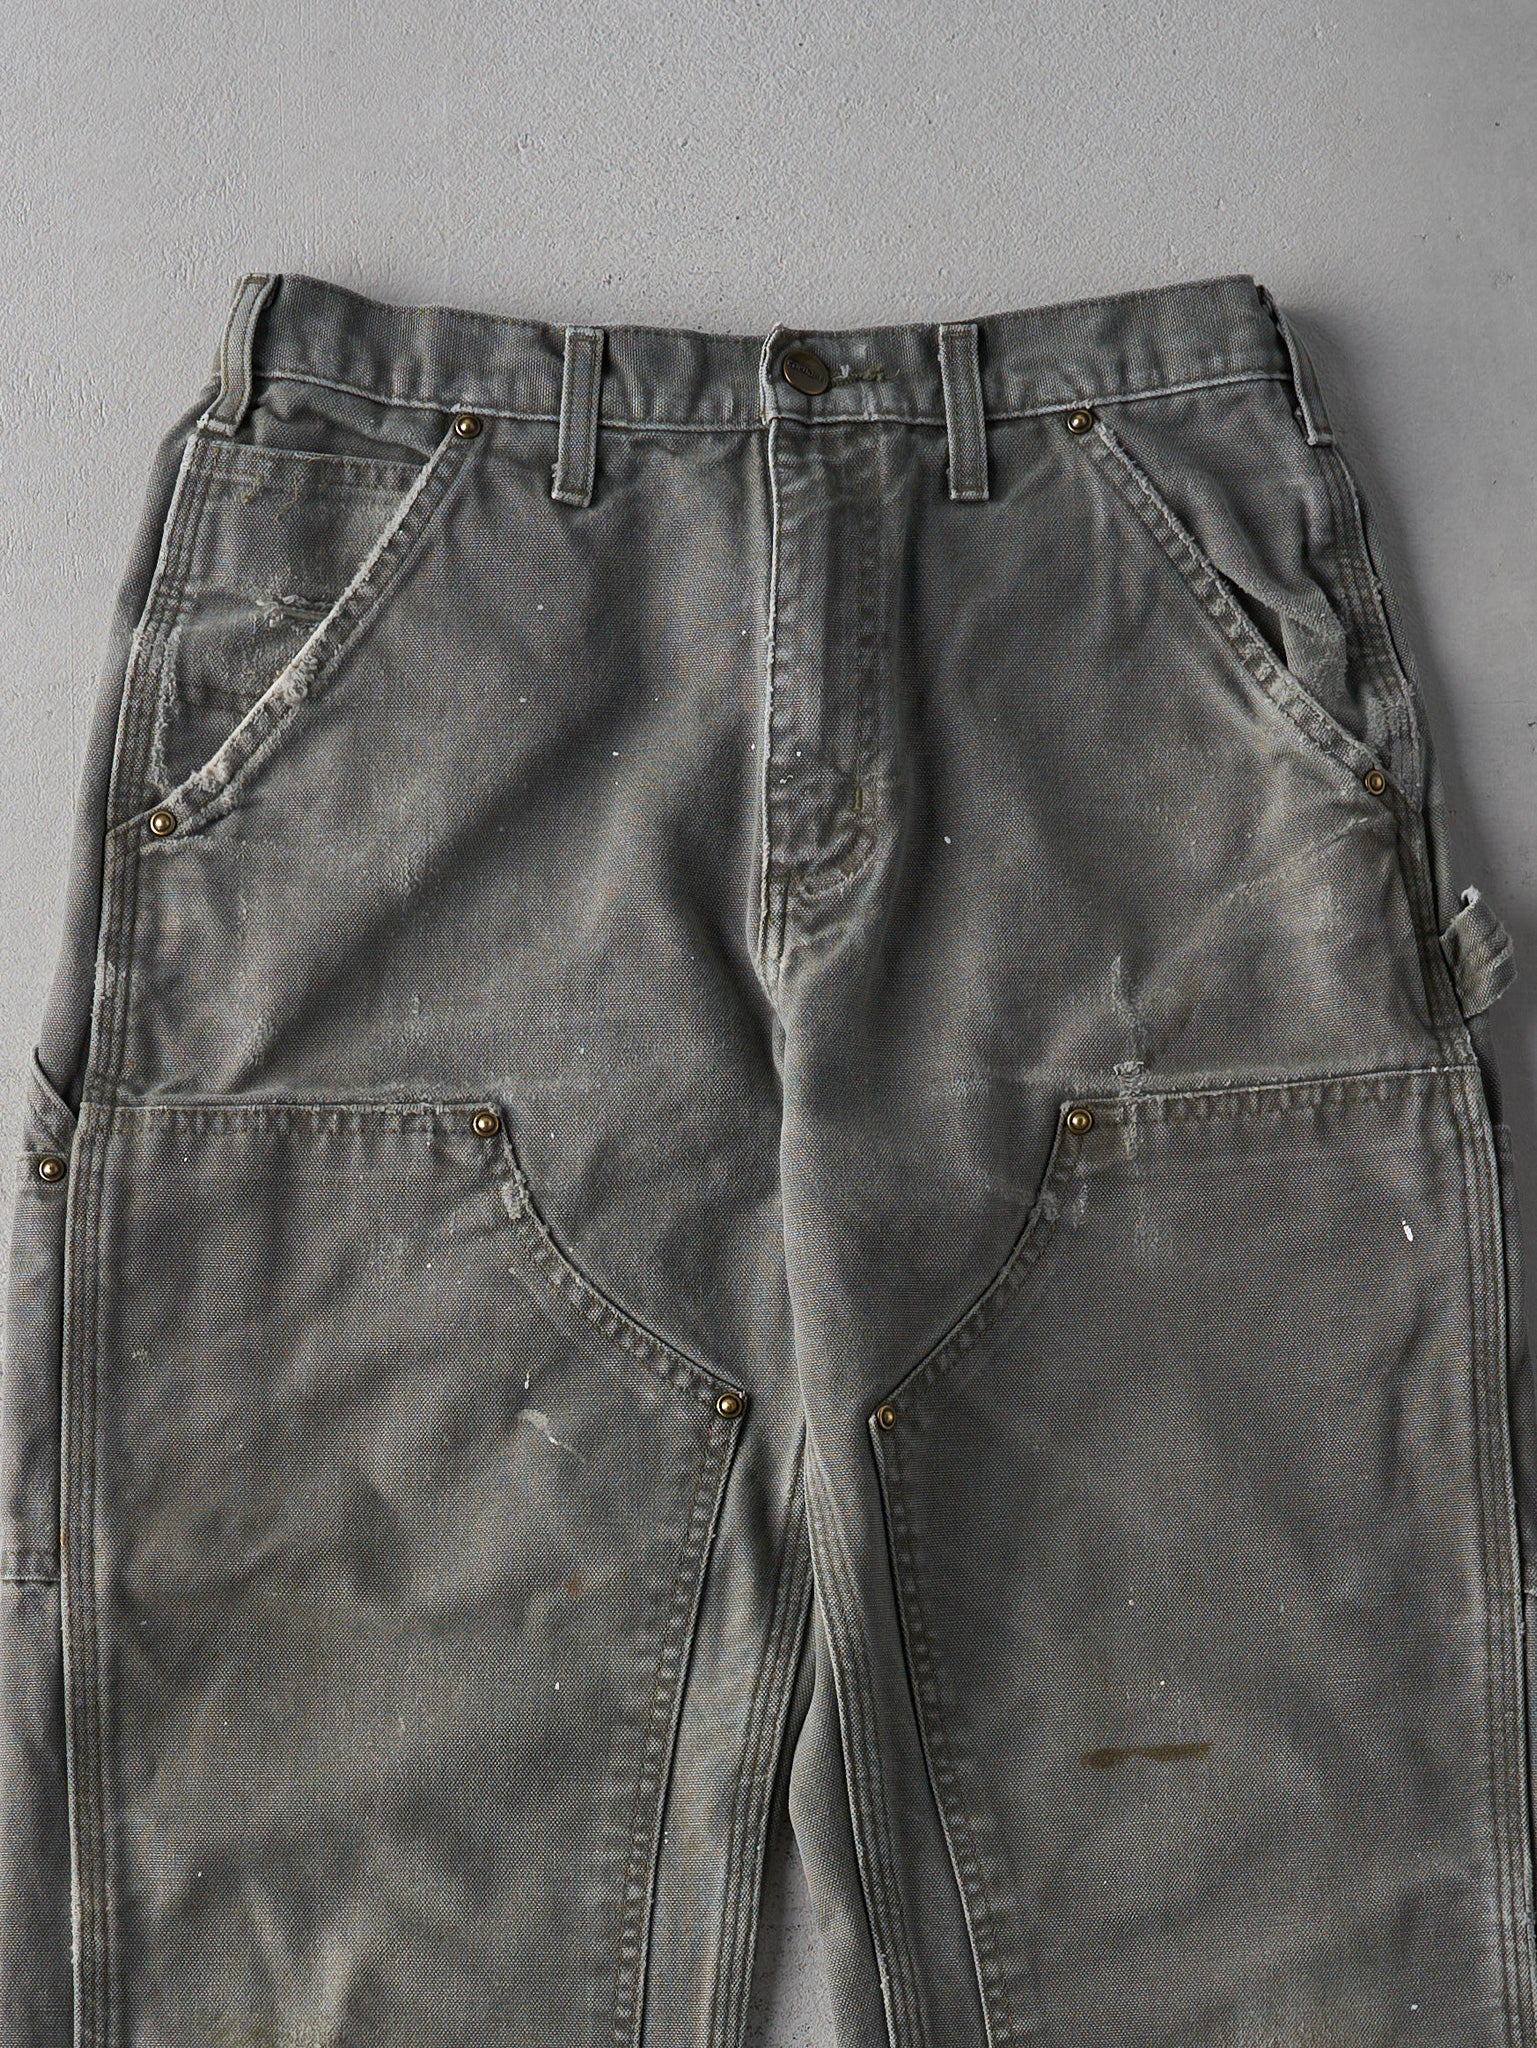 Vintage 90s Green Dungaree Carhartt Double Knee Carpenter Pants (29x28)